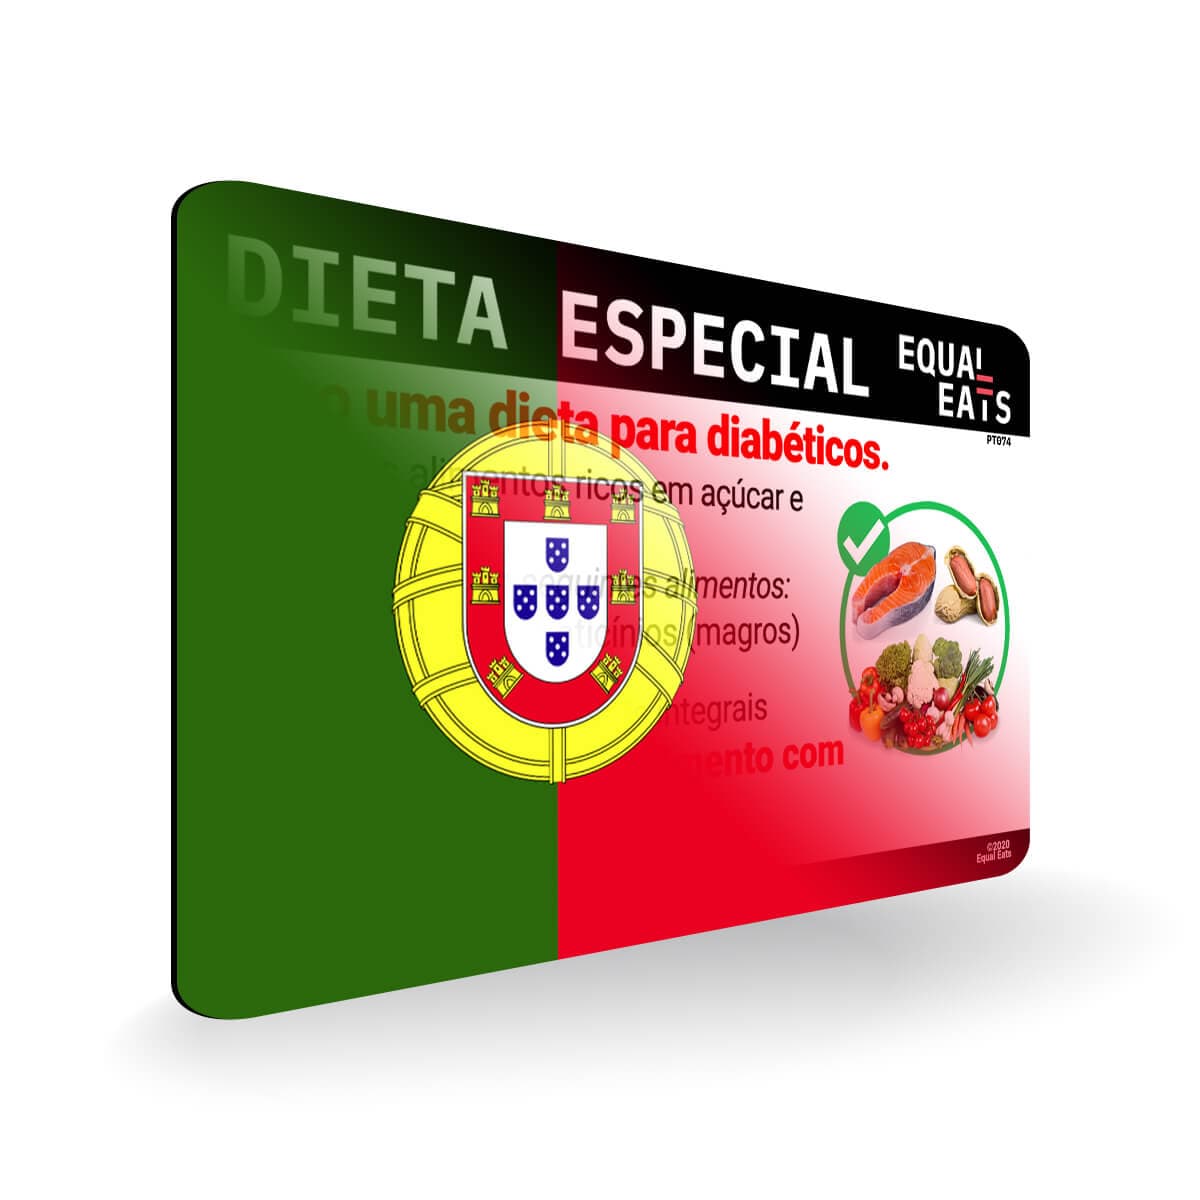 Diabetic Diet in Portuguese. Diabetes Card for Portugal Travel